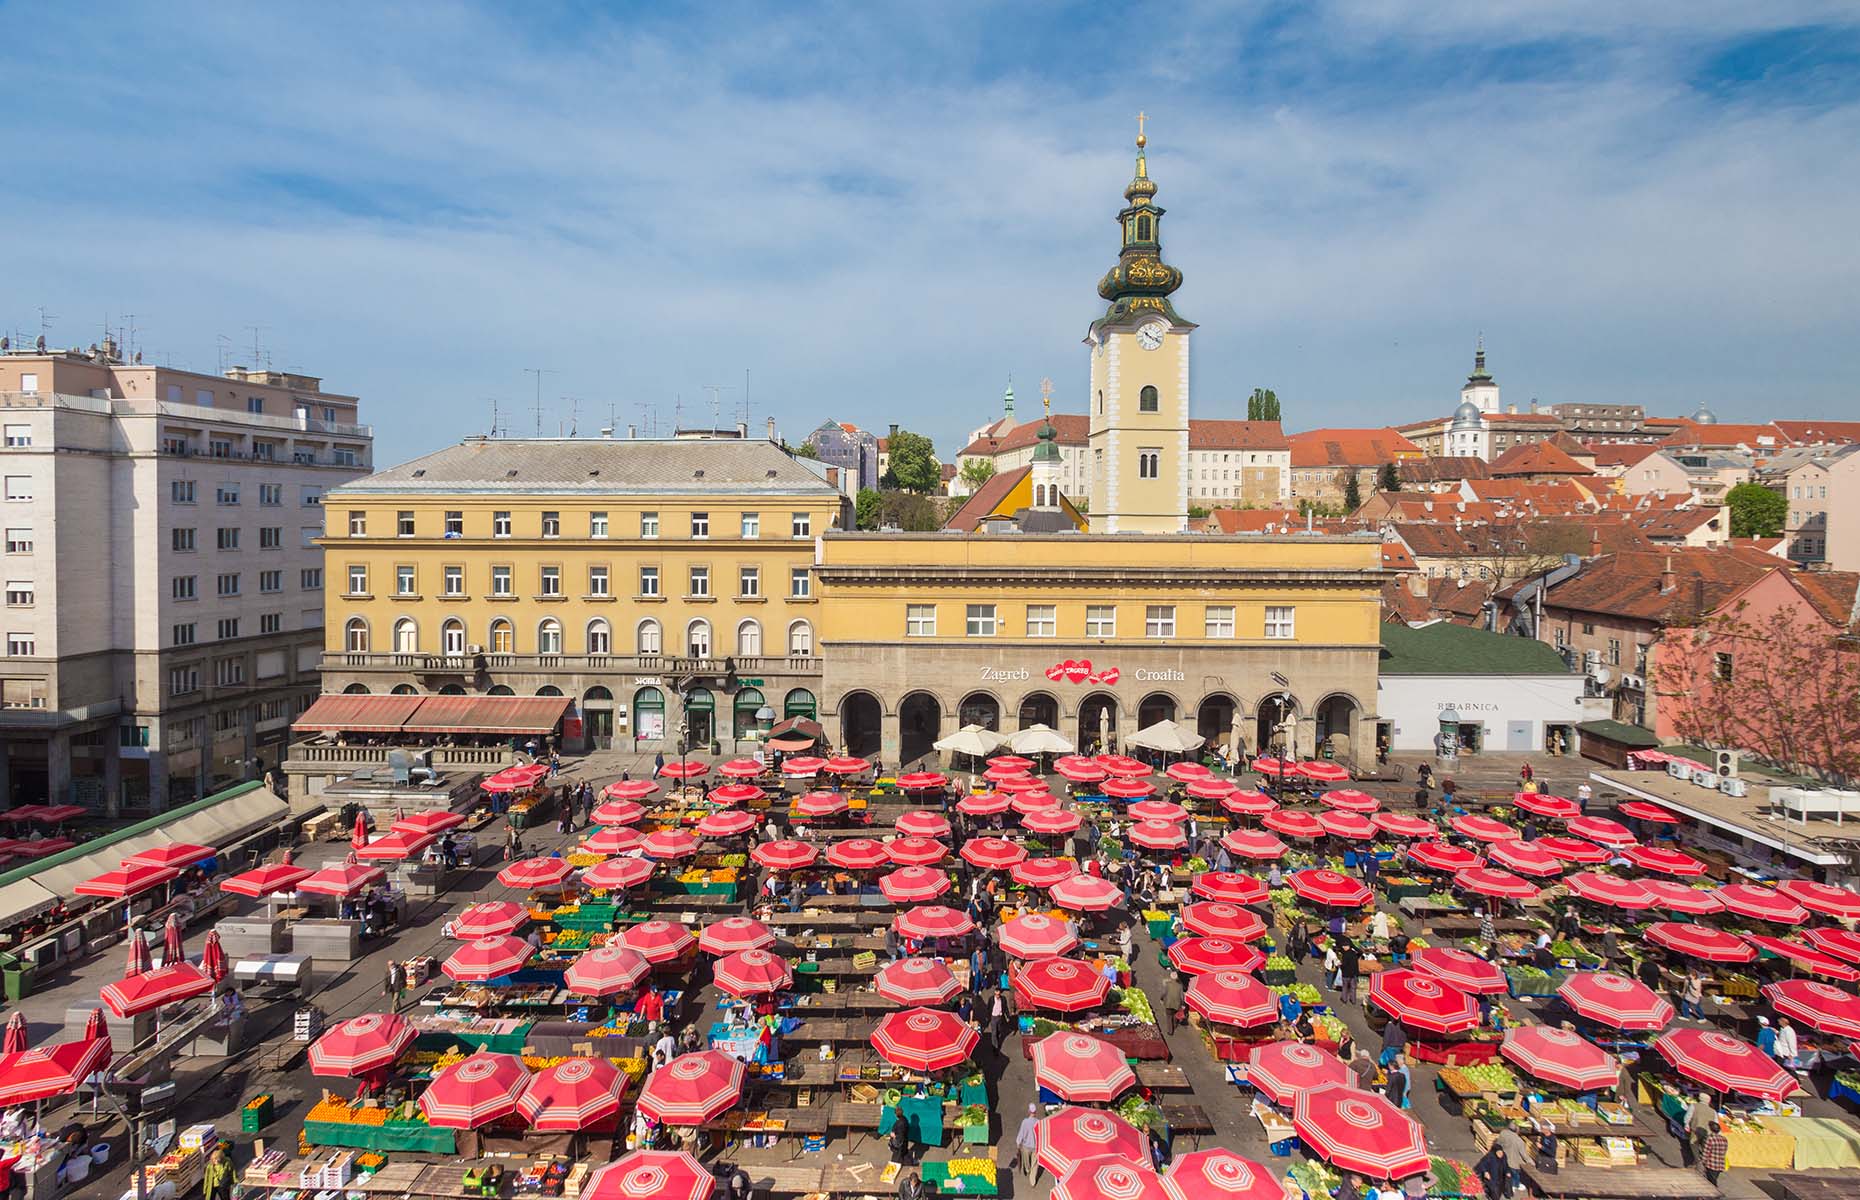 Dolac market in Zagreb (Image: paul prescott/Shutterstock)